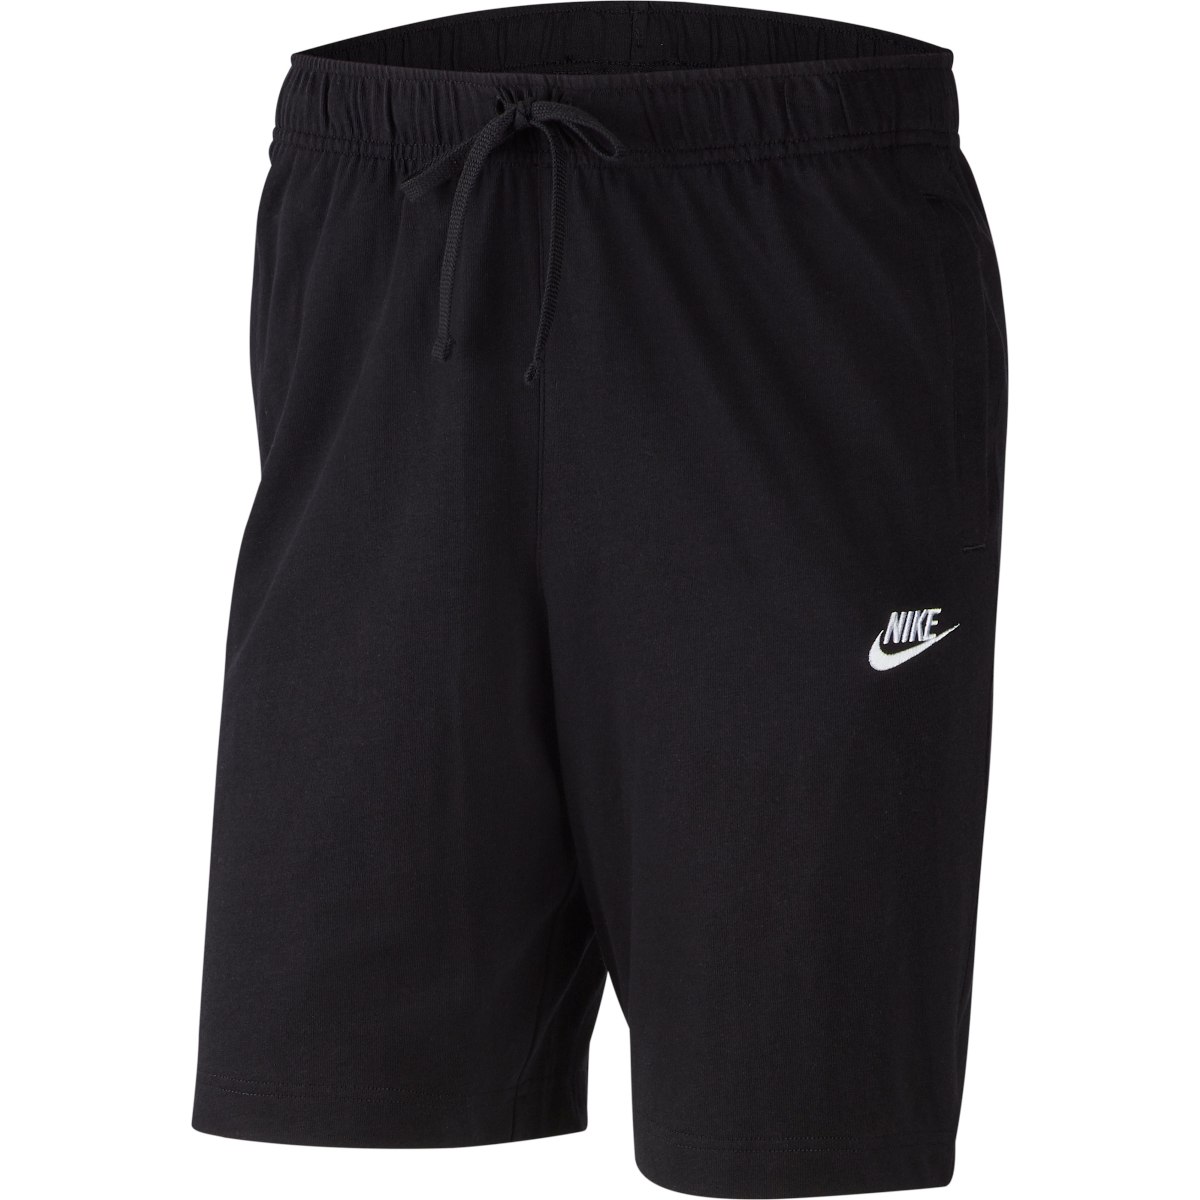 Productfoto van Nike Sportswear Club Shorts Heren - black/white BV2772-010